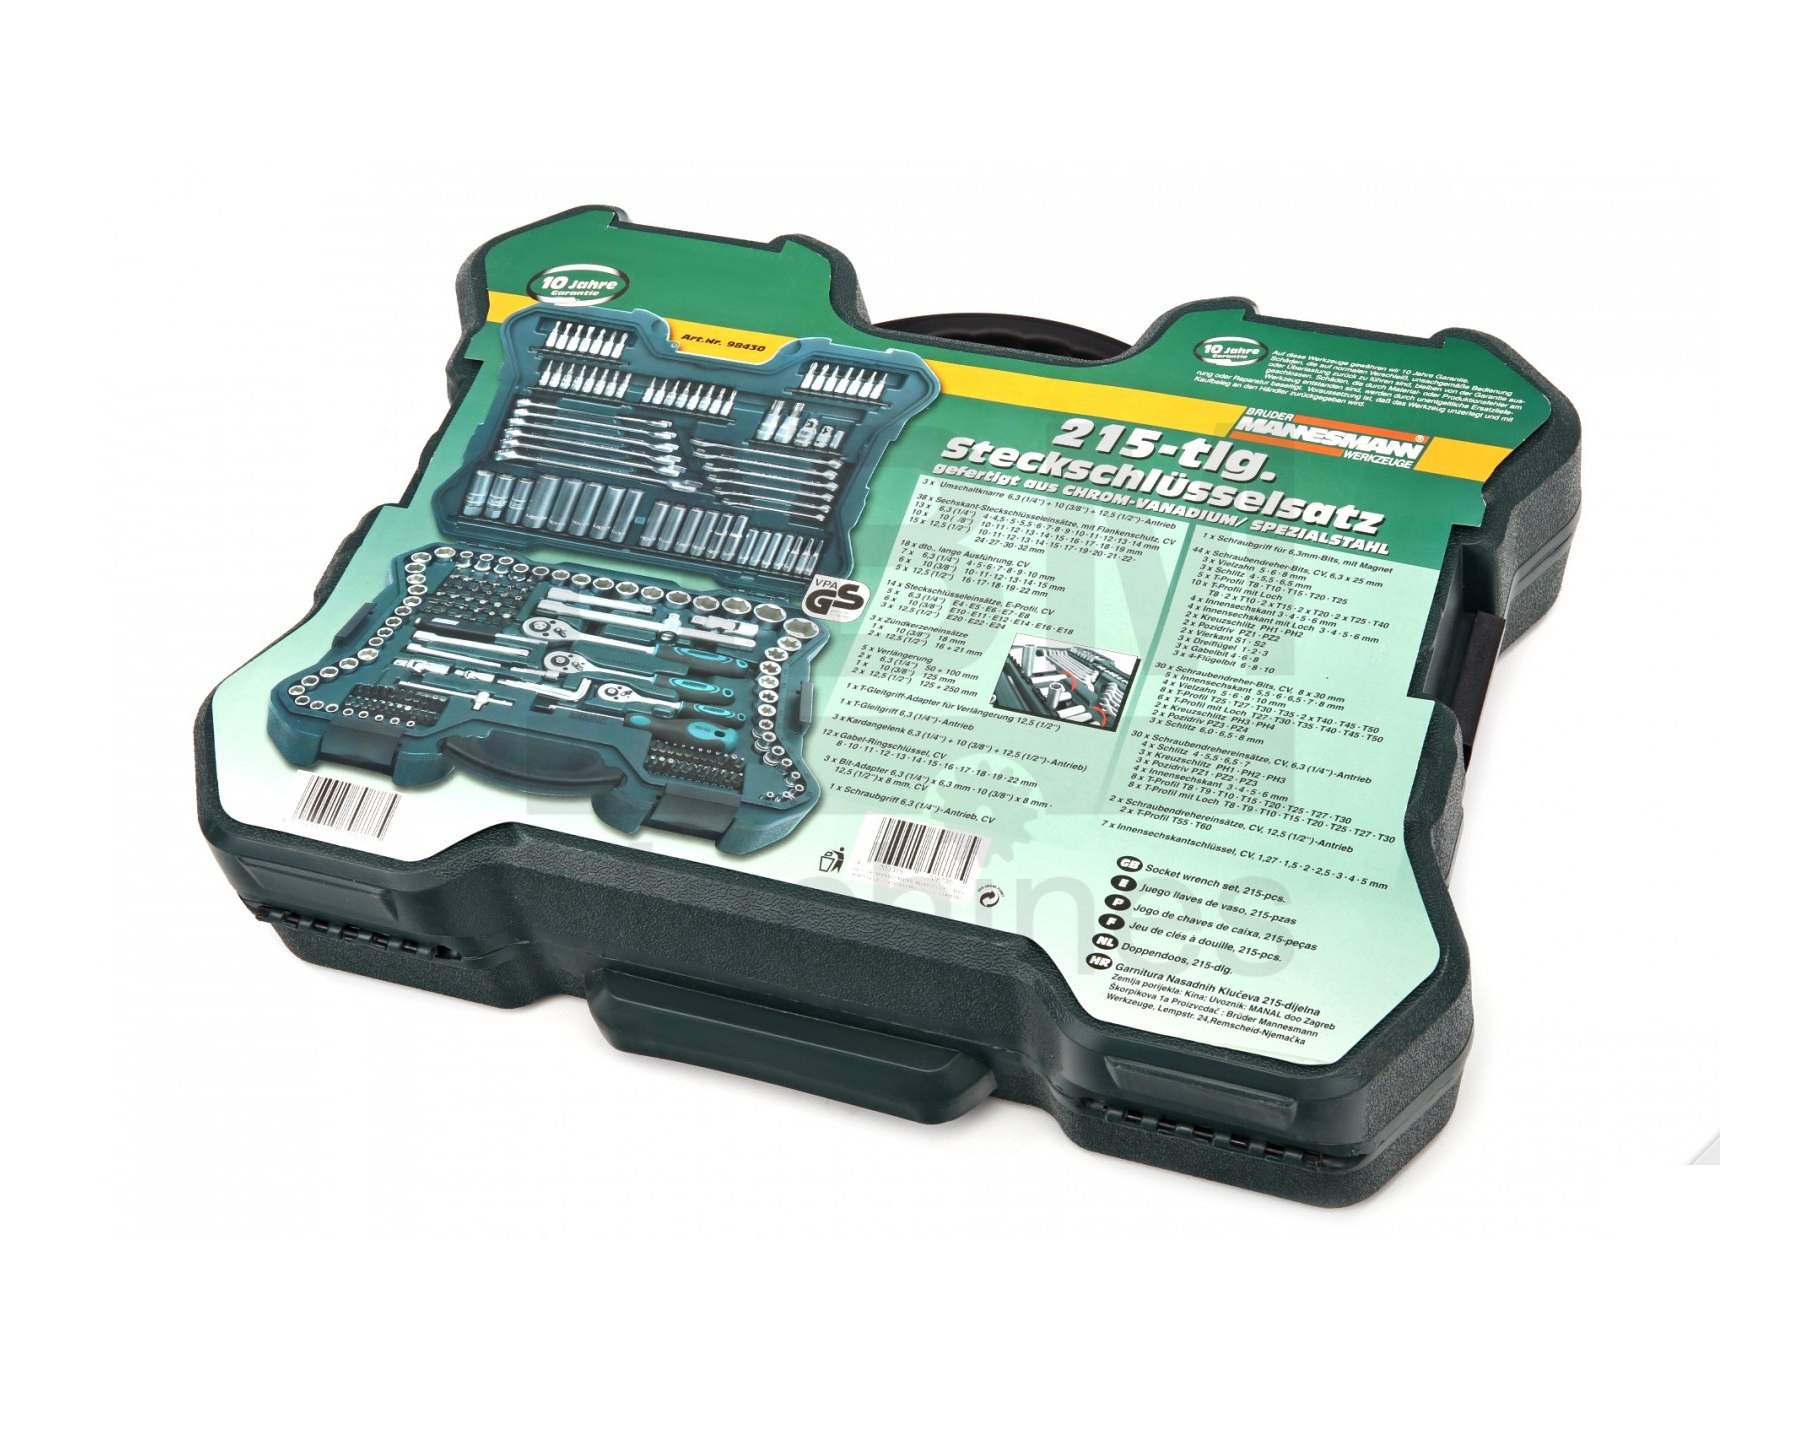 MANNESMANN 98430 socket wrench set, 215-piece hand tool, green / black New